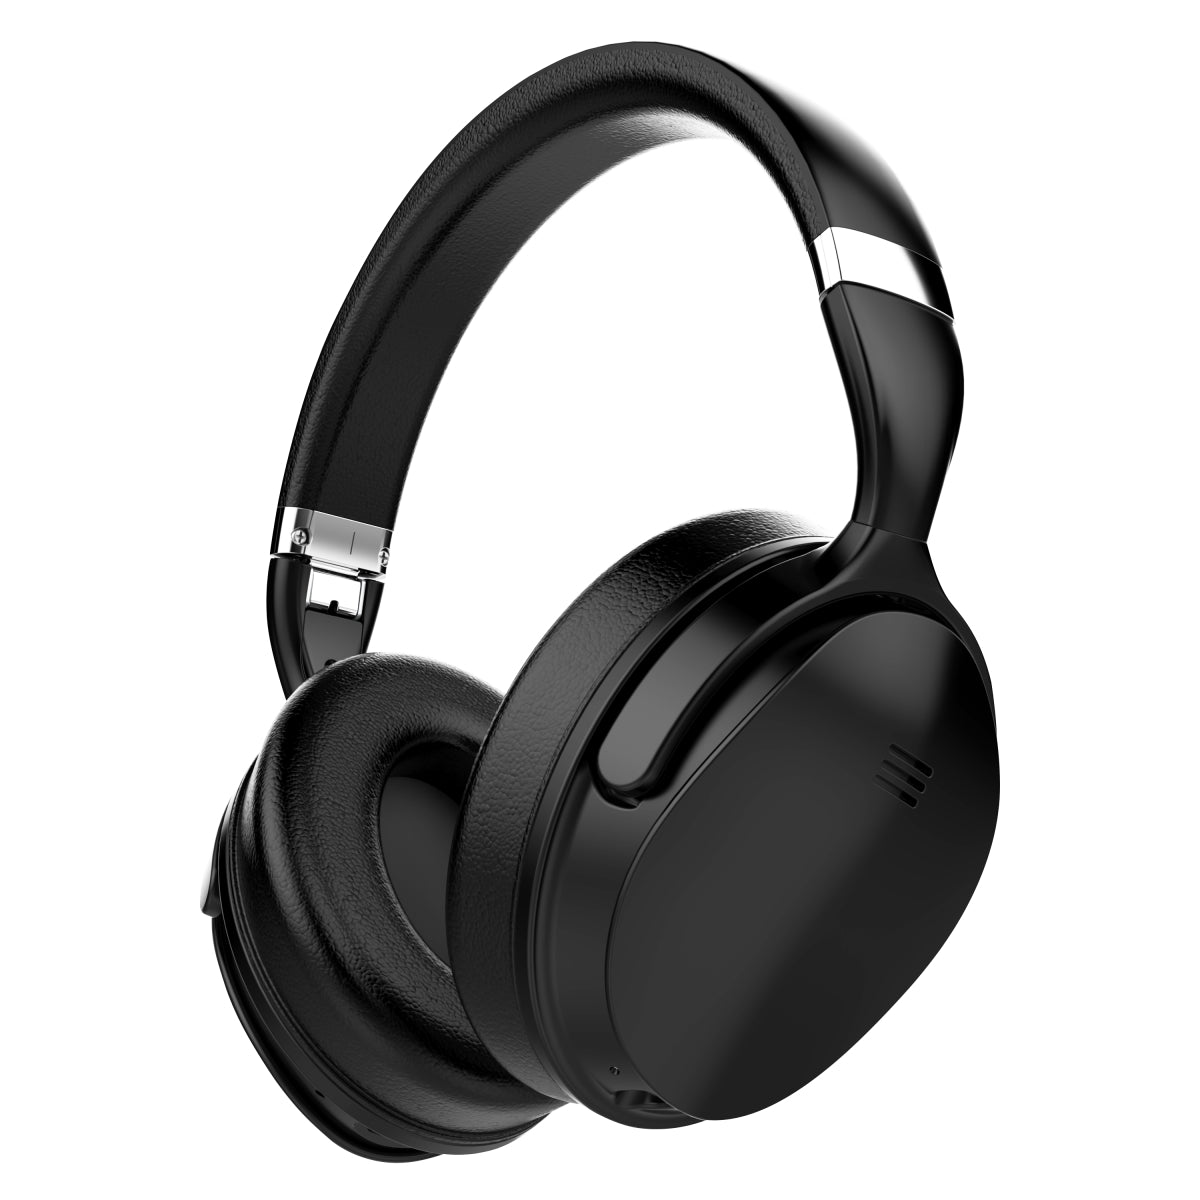 VolkanoX Silenco series Active Noise Cancelling Bluetooth headphones - black